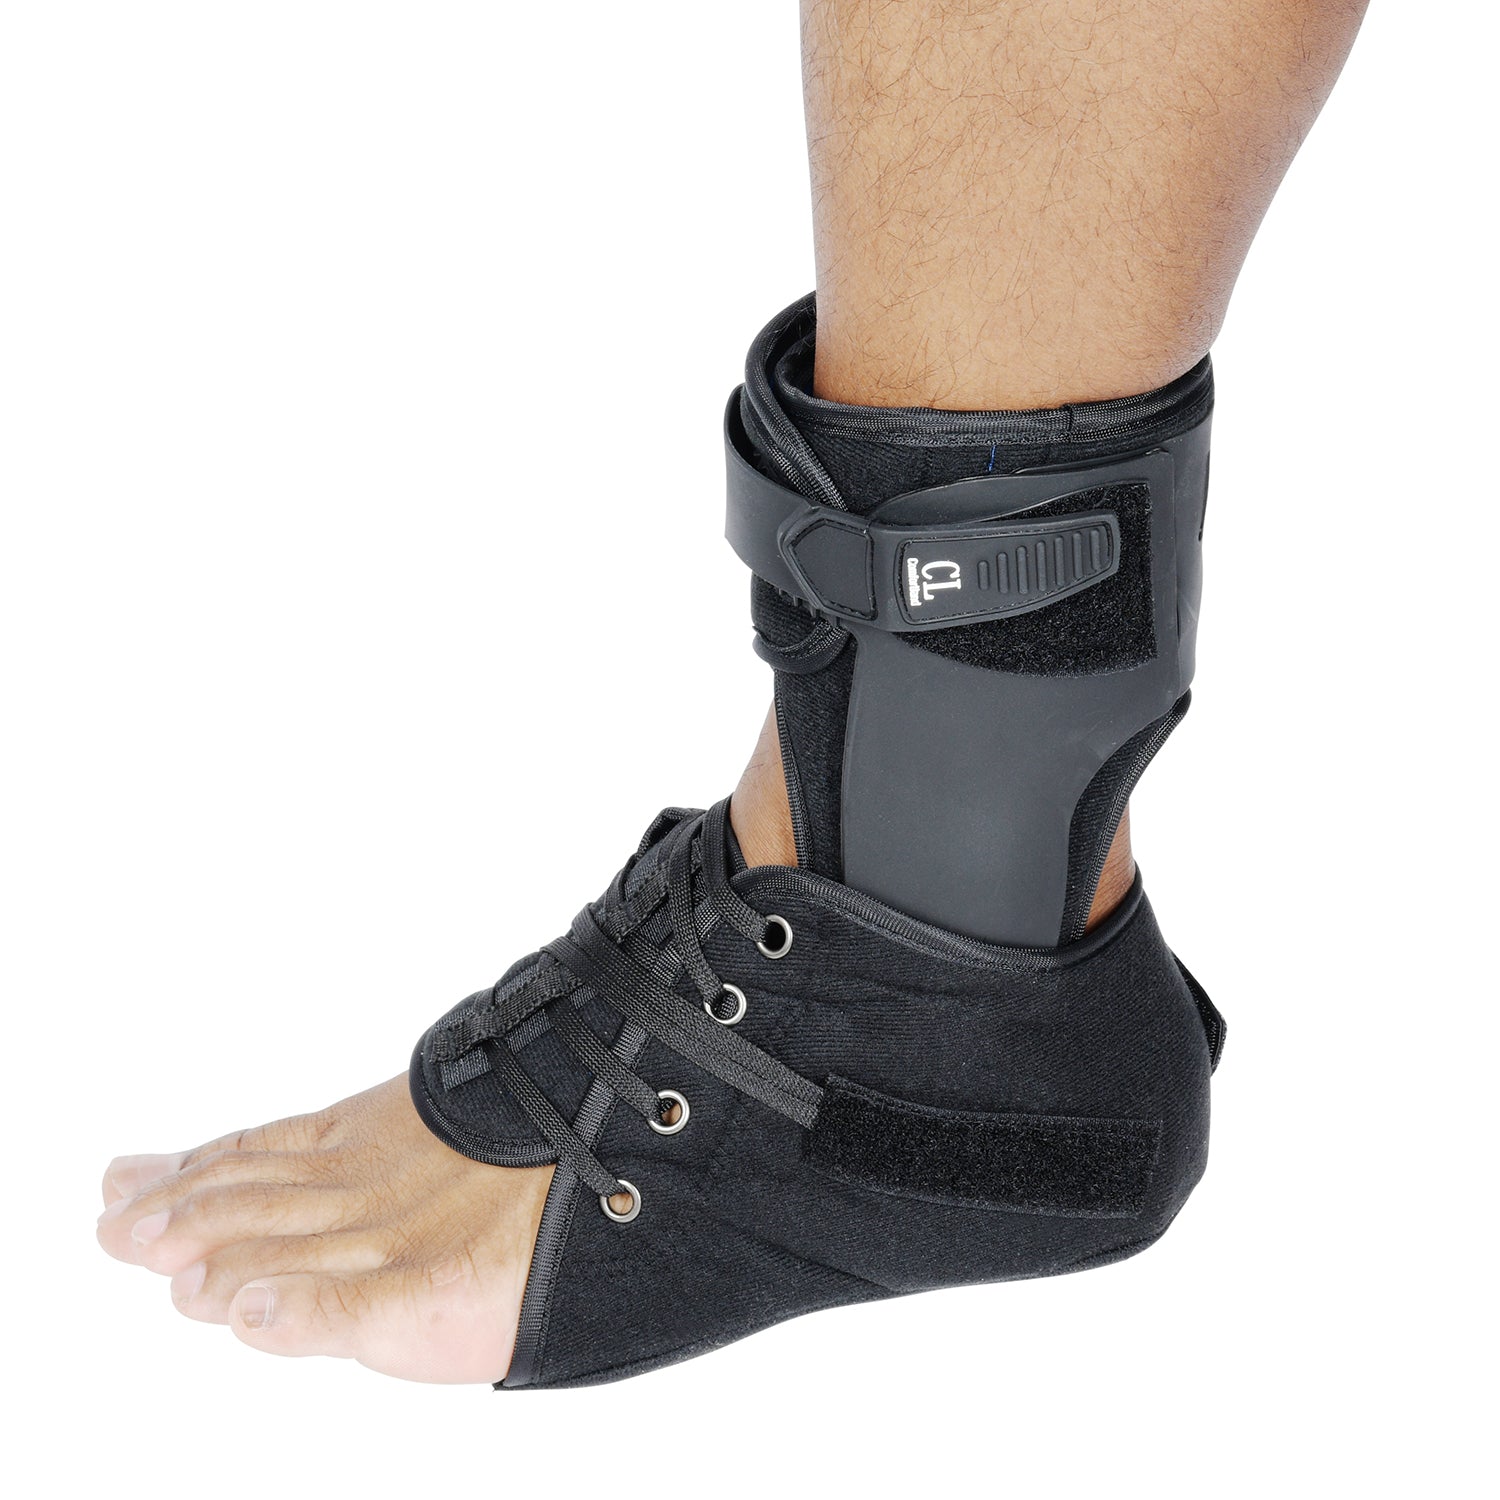 Ankle Brace Walker Fully Adjustable